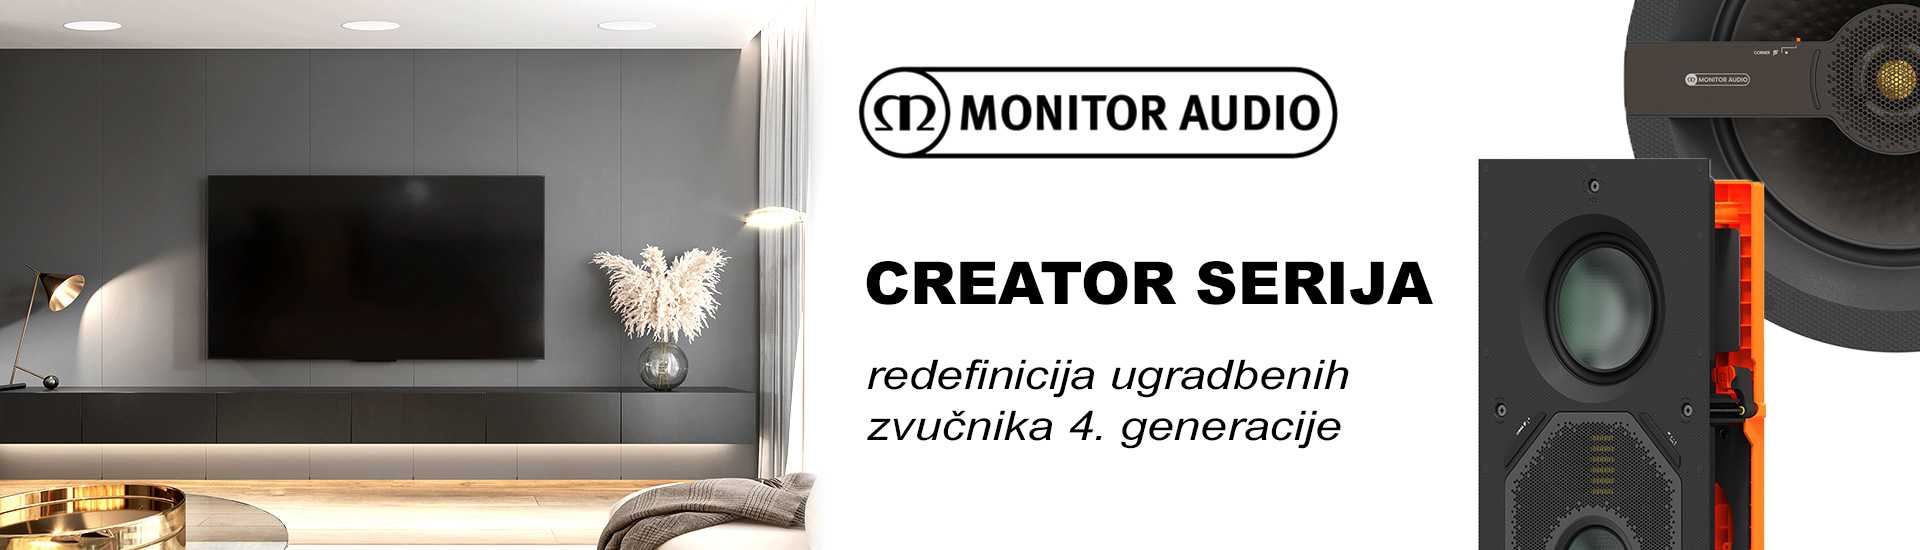 Monitor Audio Creator serija